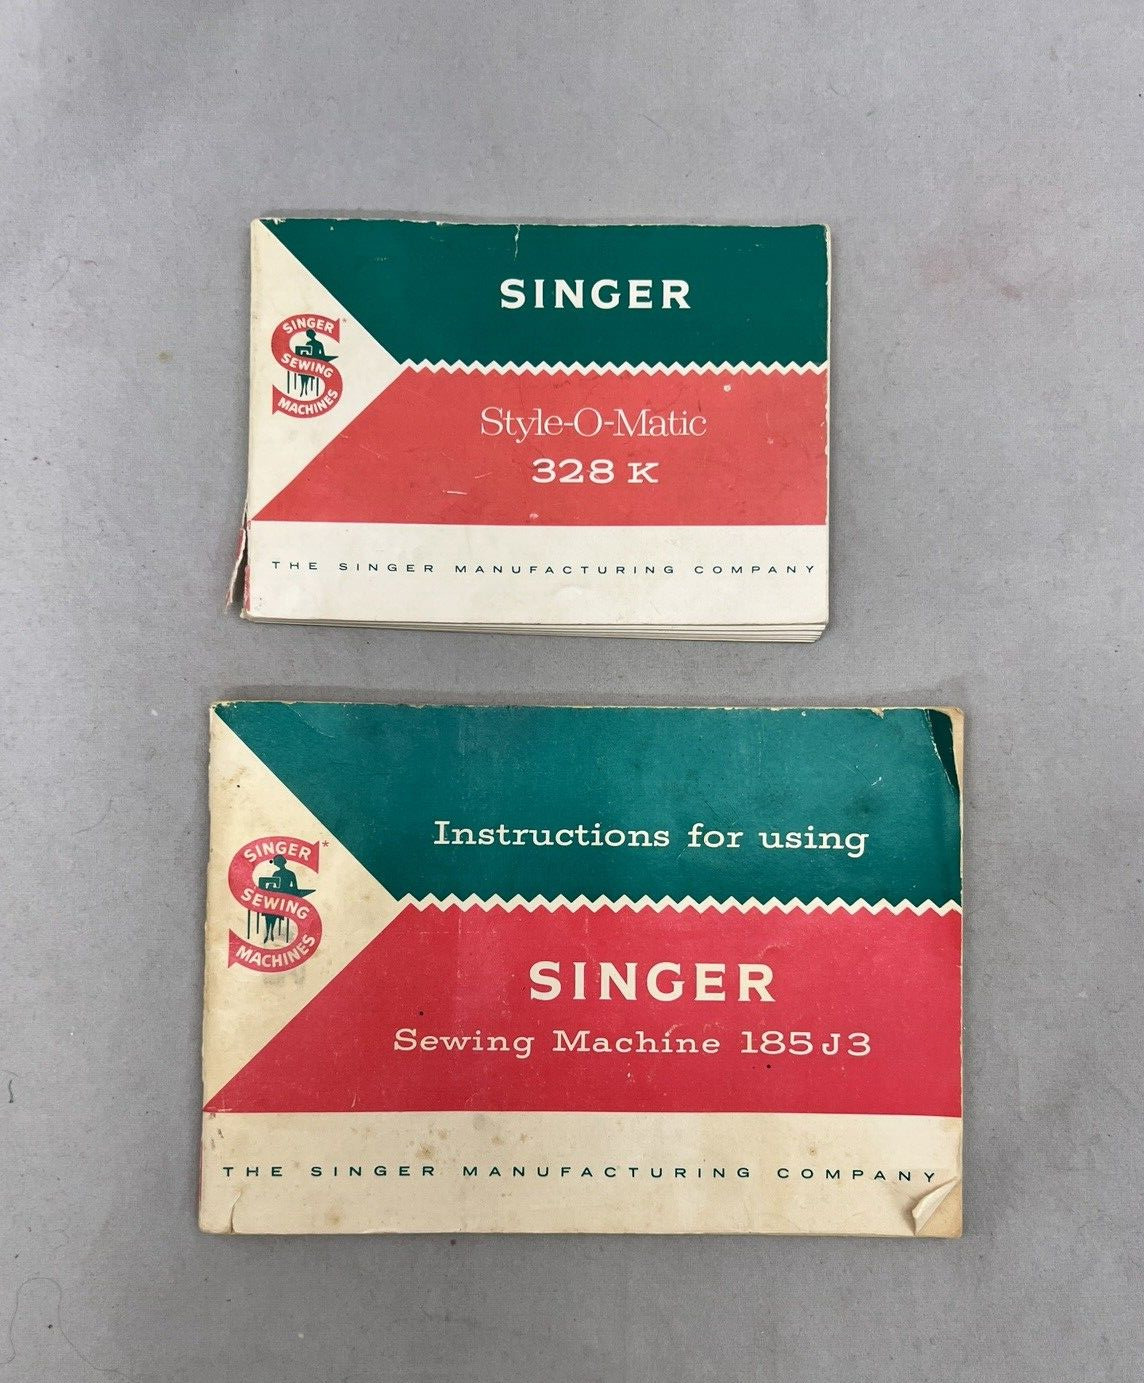 2 Vintage SINGER Sewing Machine Manuals Style-O-Matic 328K &185J3 1958